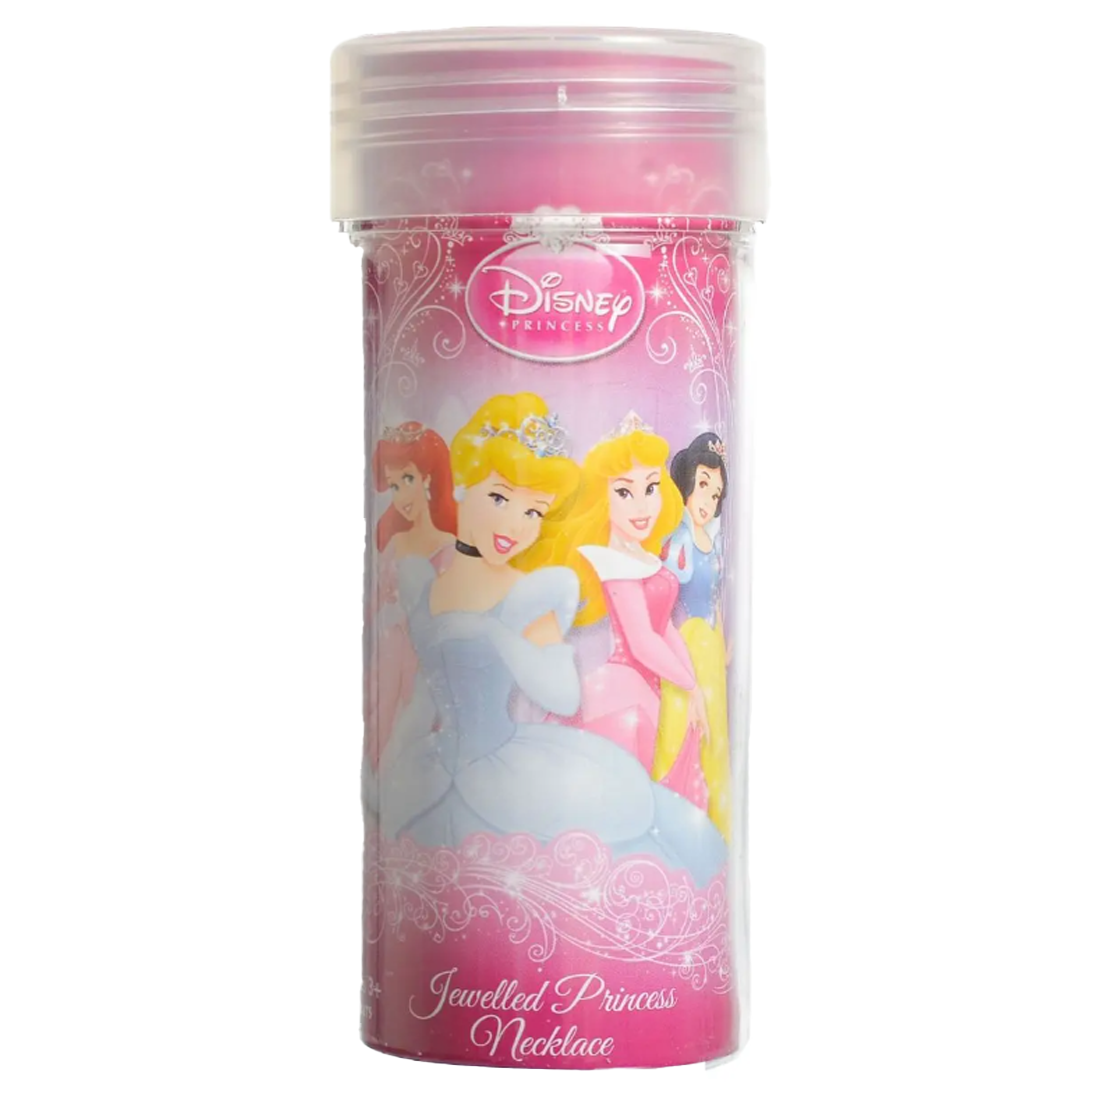 Princess Aurora - Disney's Sleeping Beauty